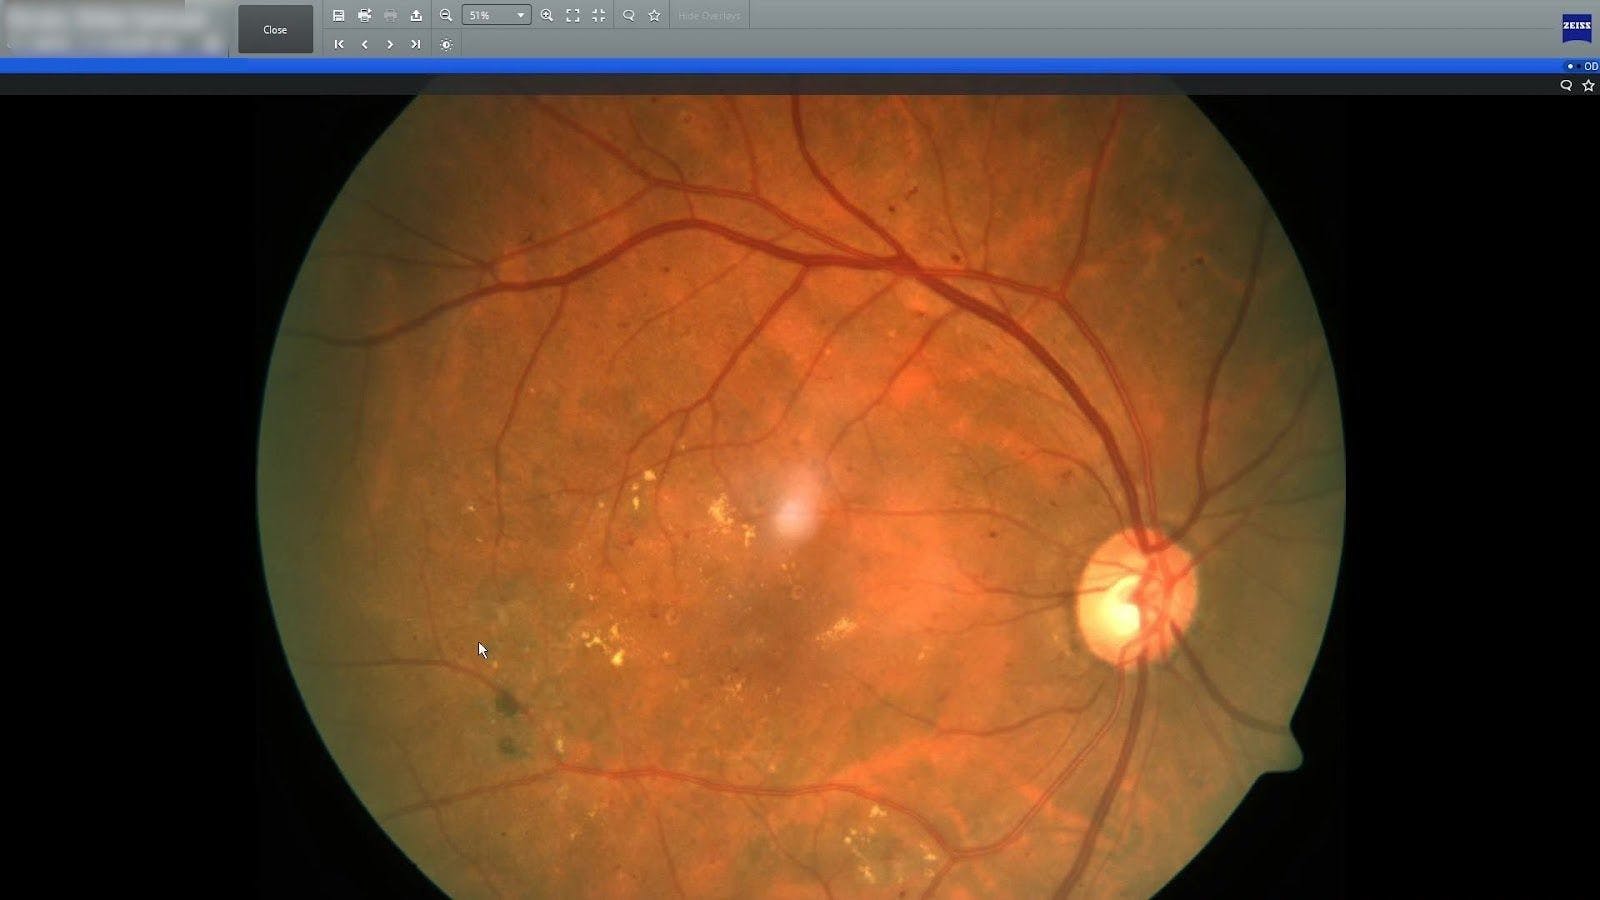 Retina image showing diabetic retinopathy and macular edema